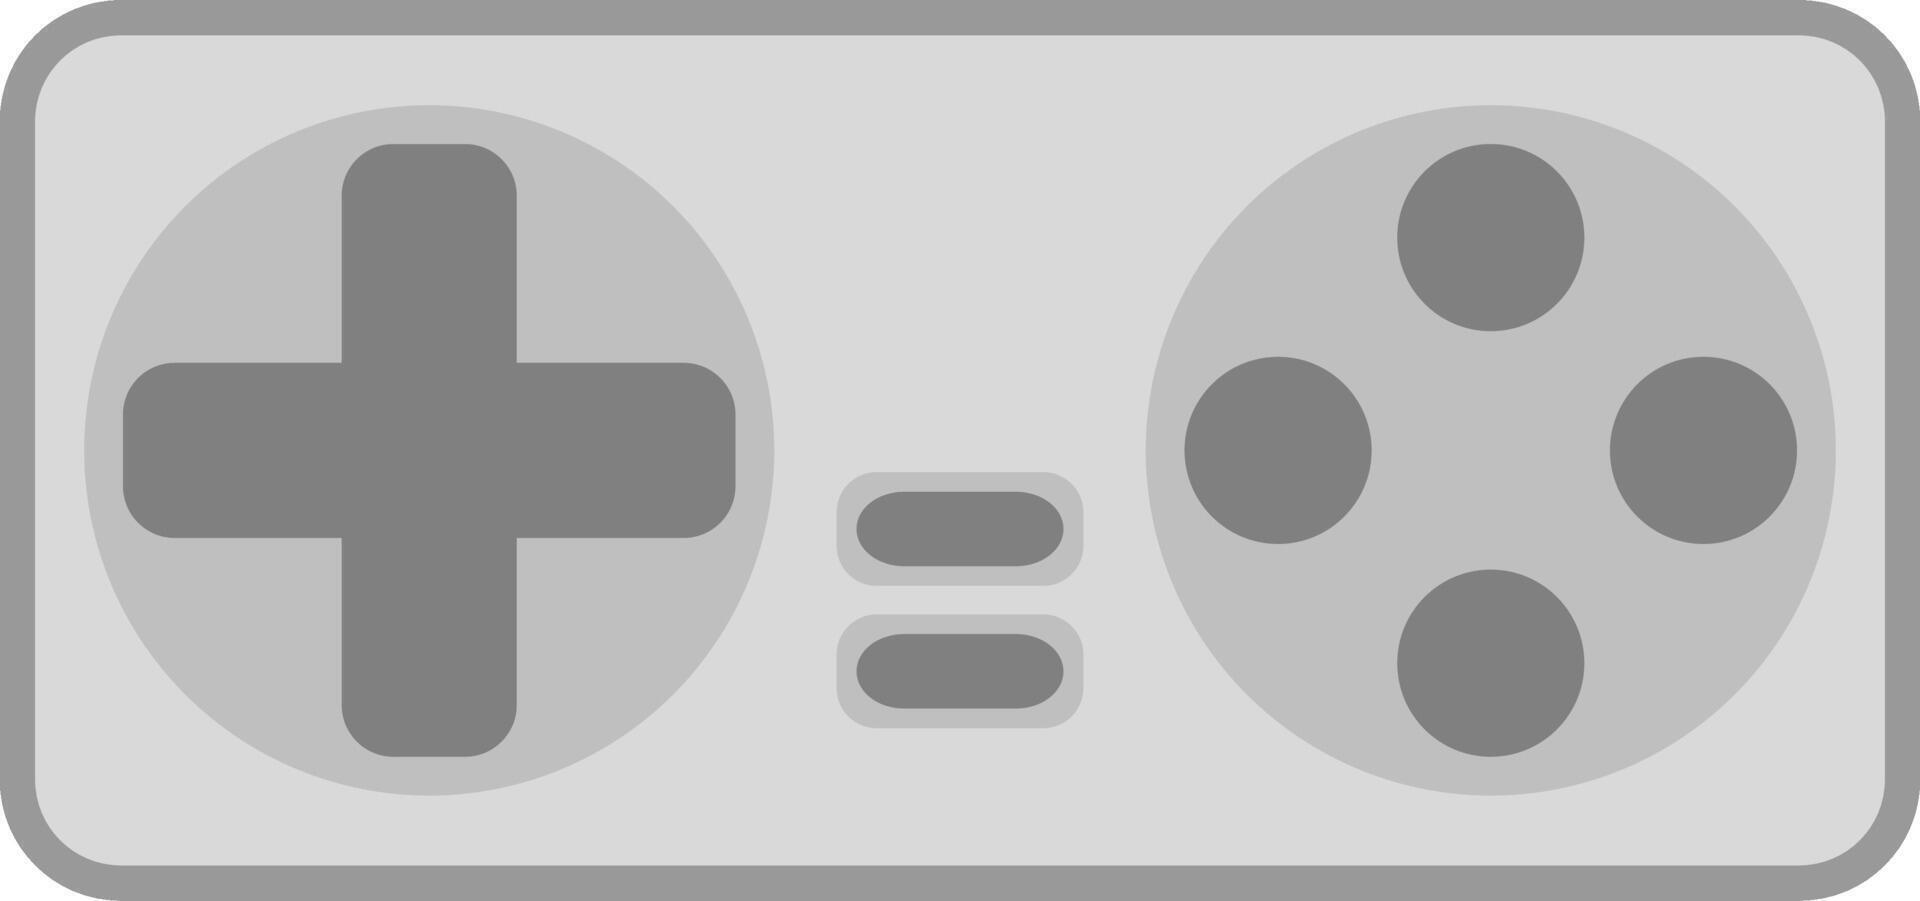 grå spel kontroller. spel kontrollant ikon. vektor